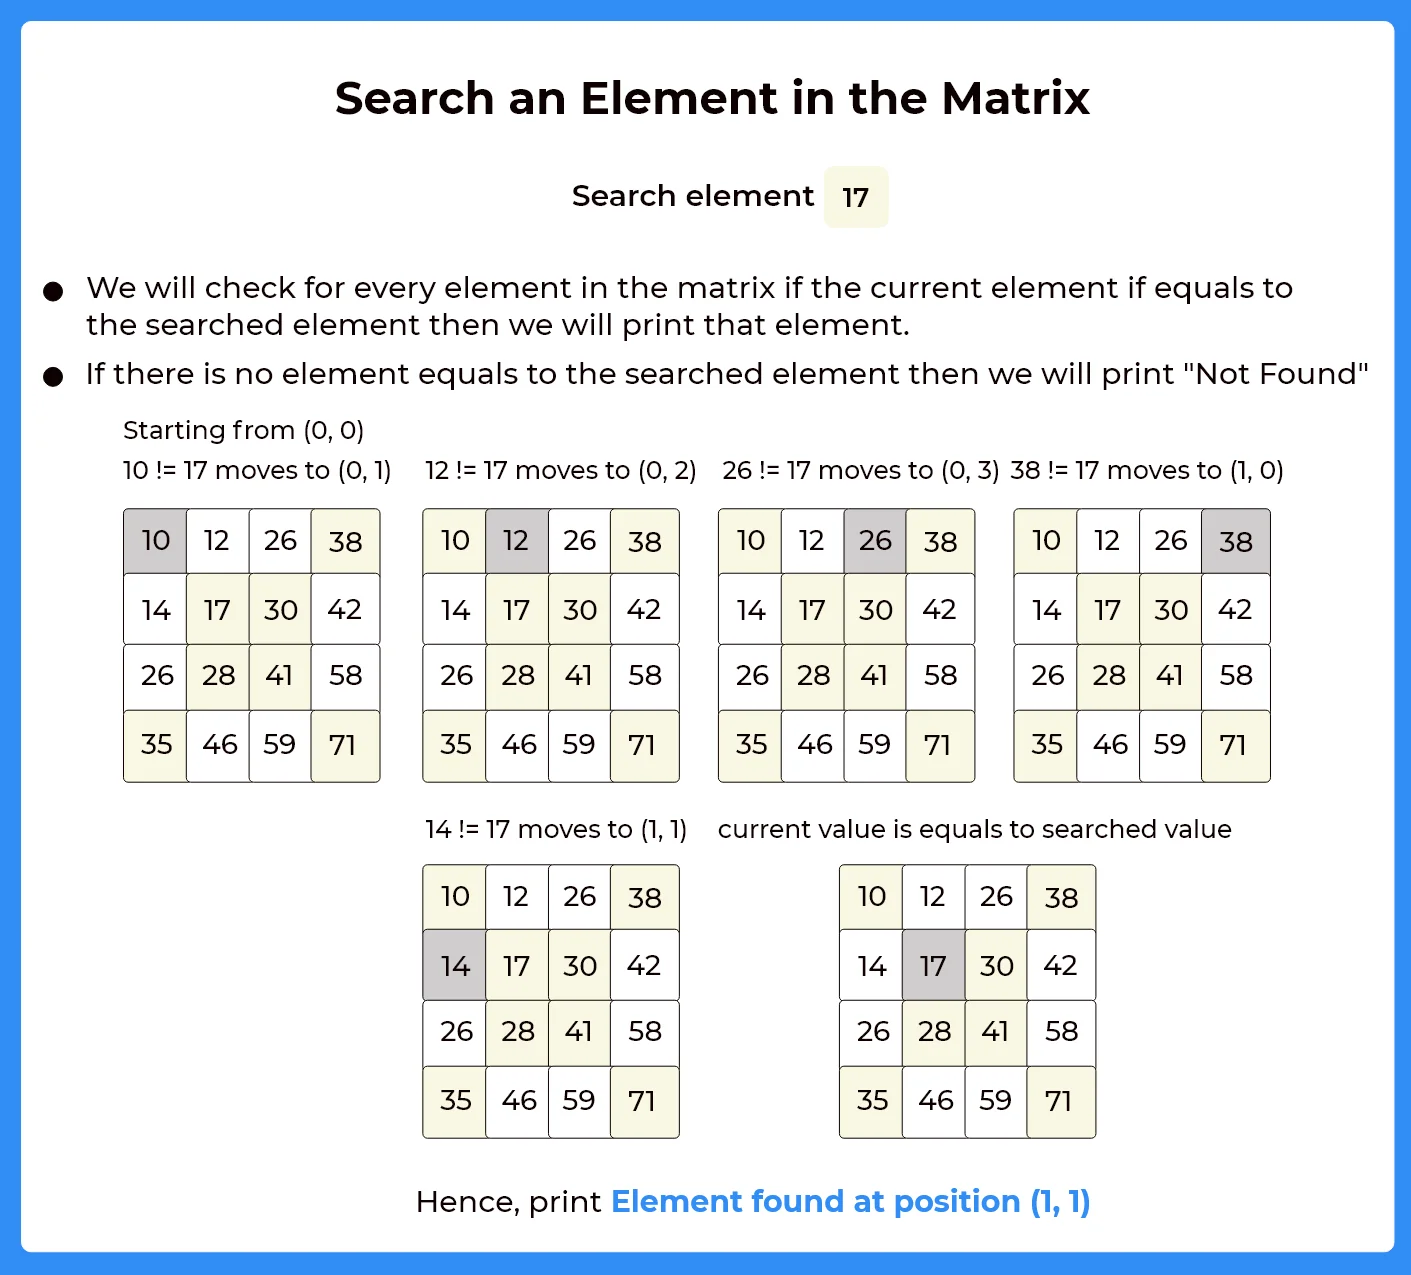 Search an element in a matriix